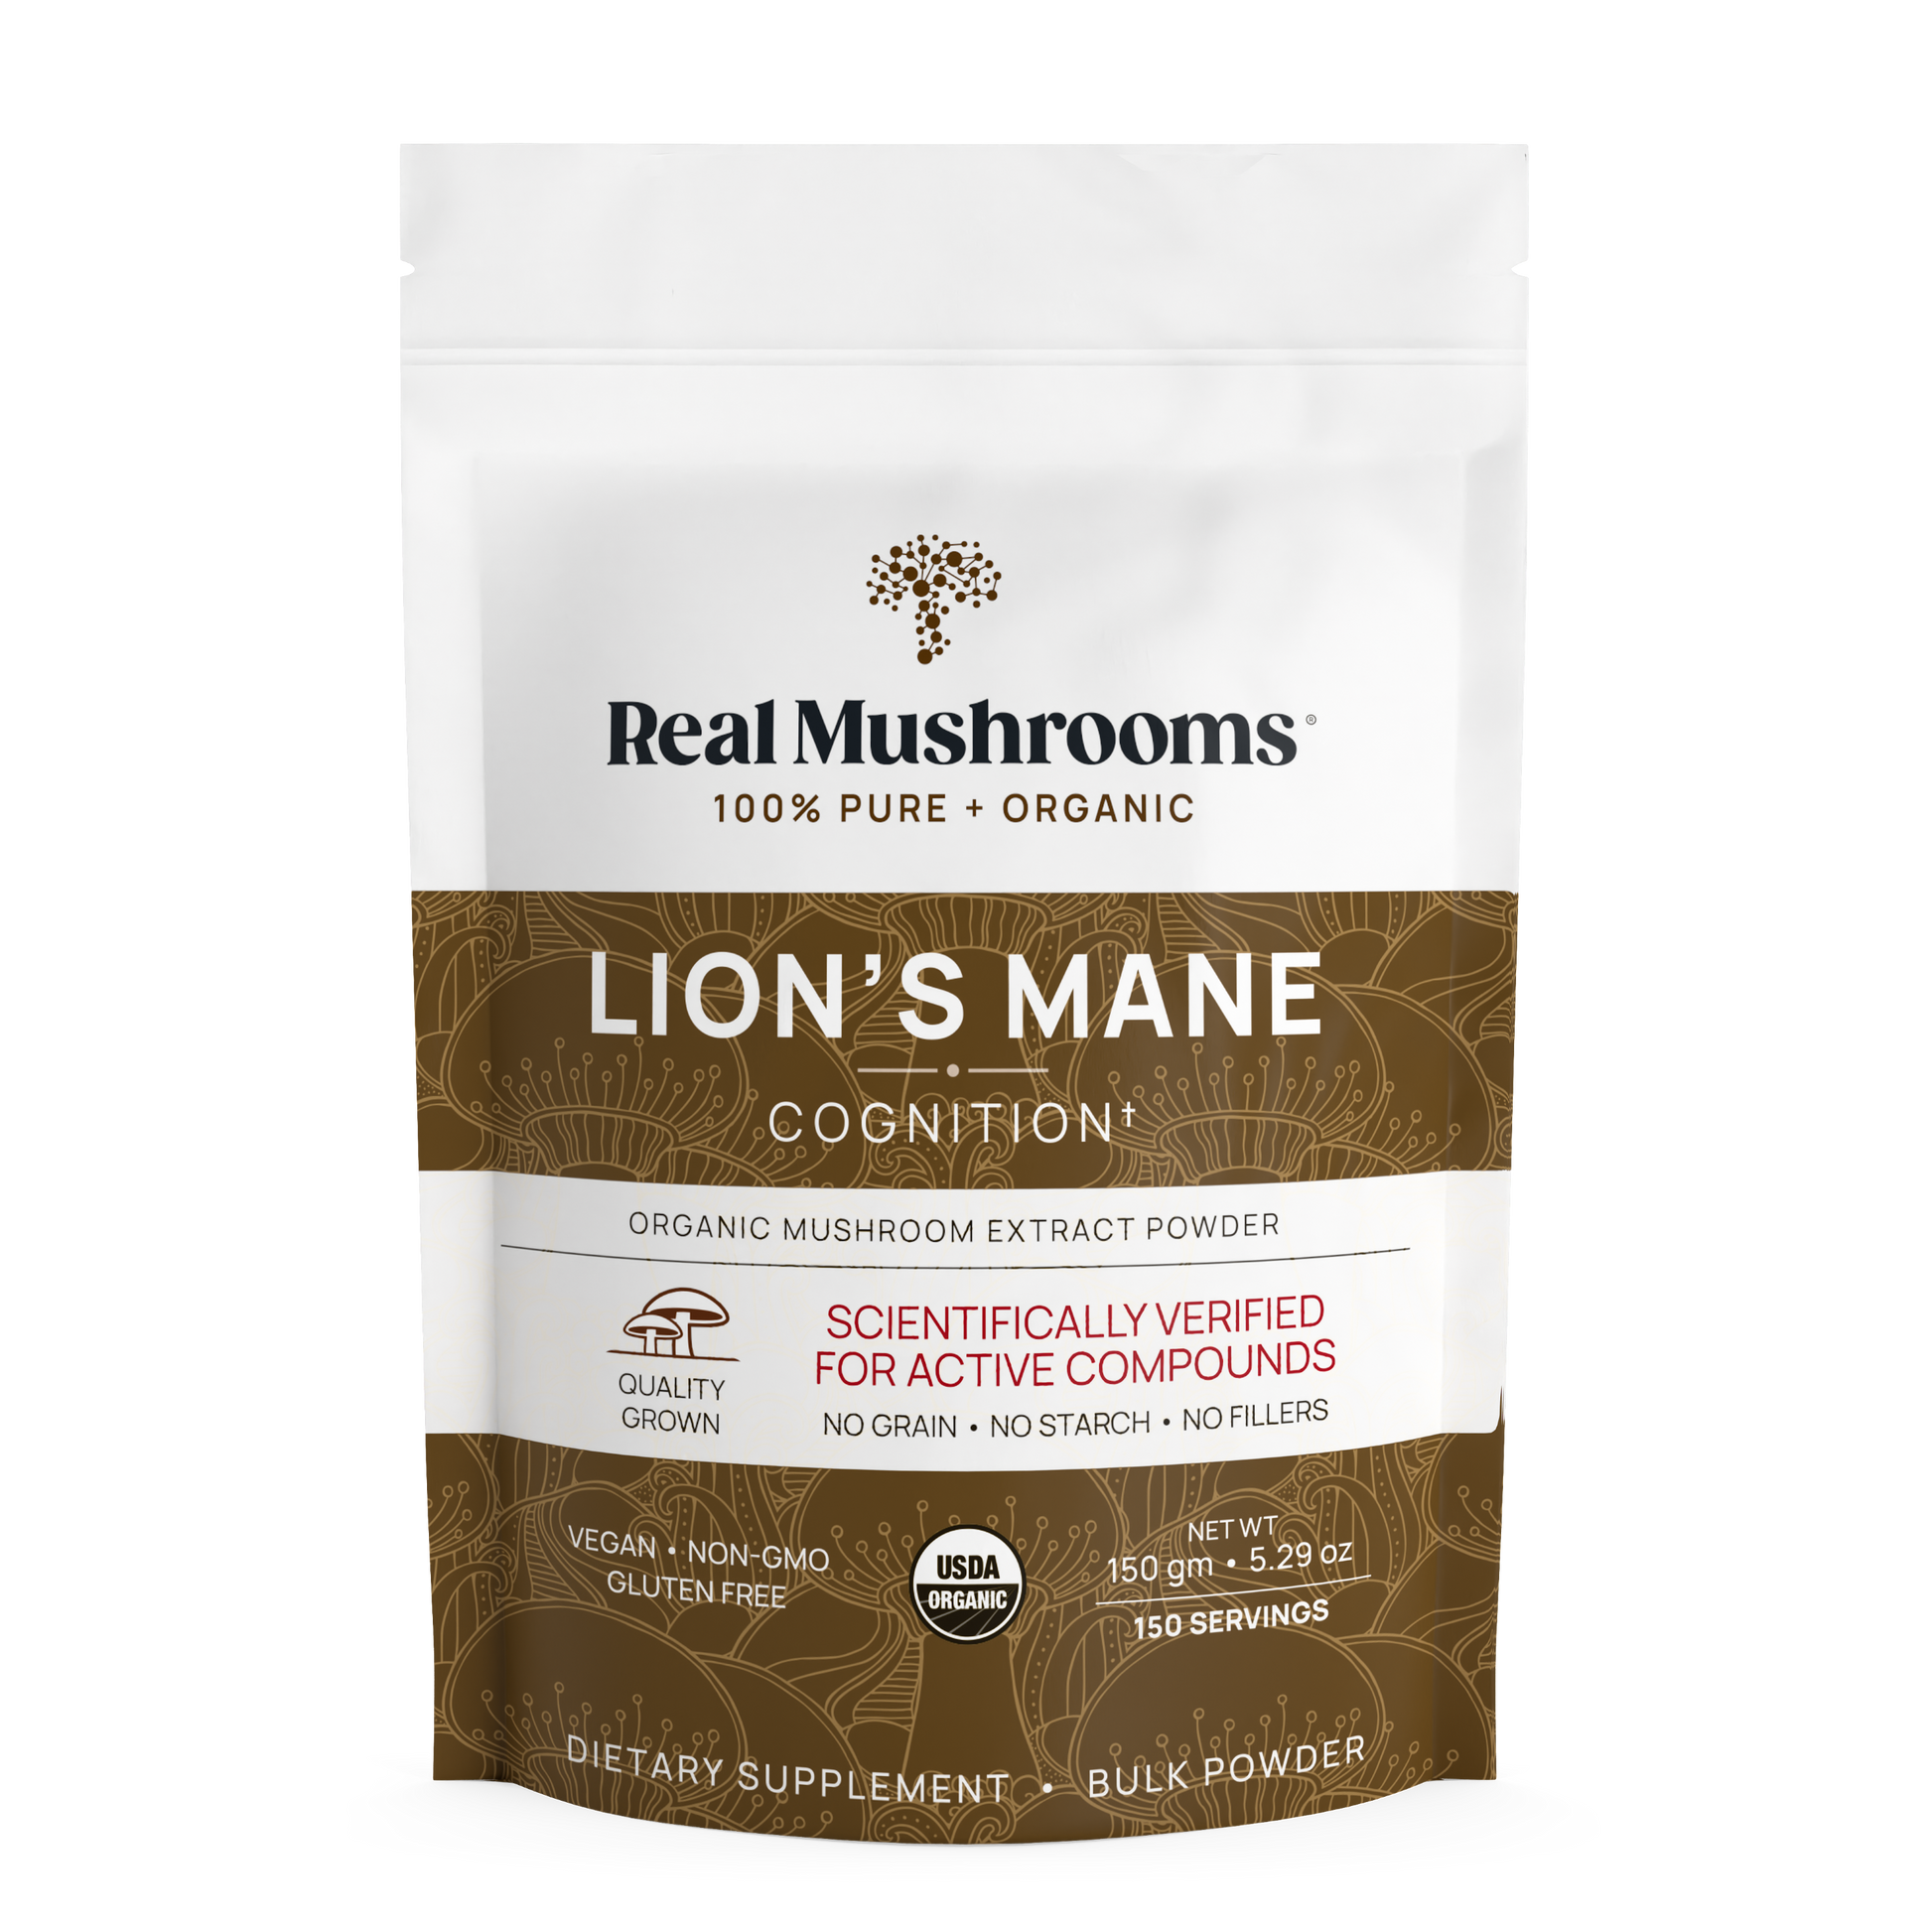 Real Mushrooms Organic Lions Mane Mushroom Powder for Pets condition